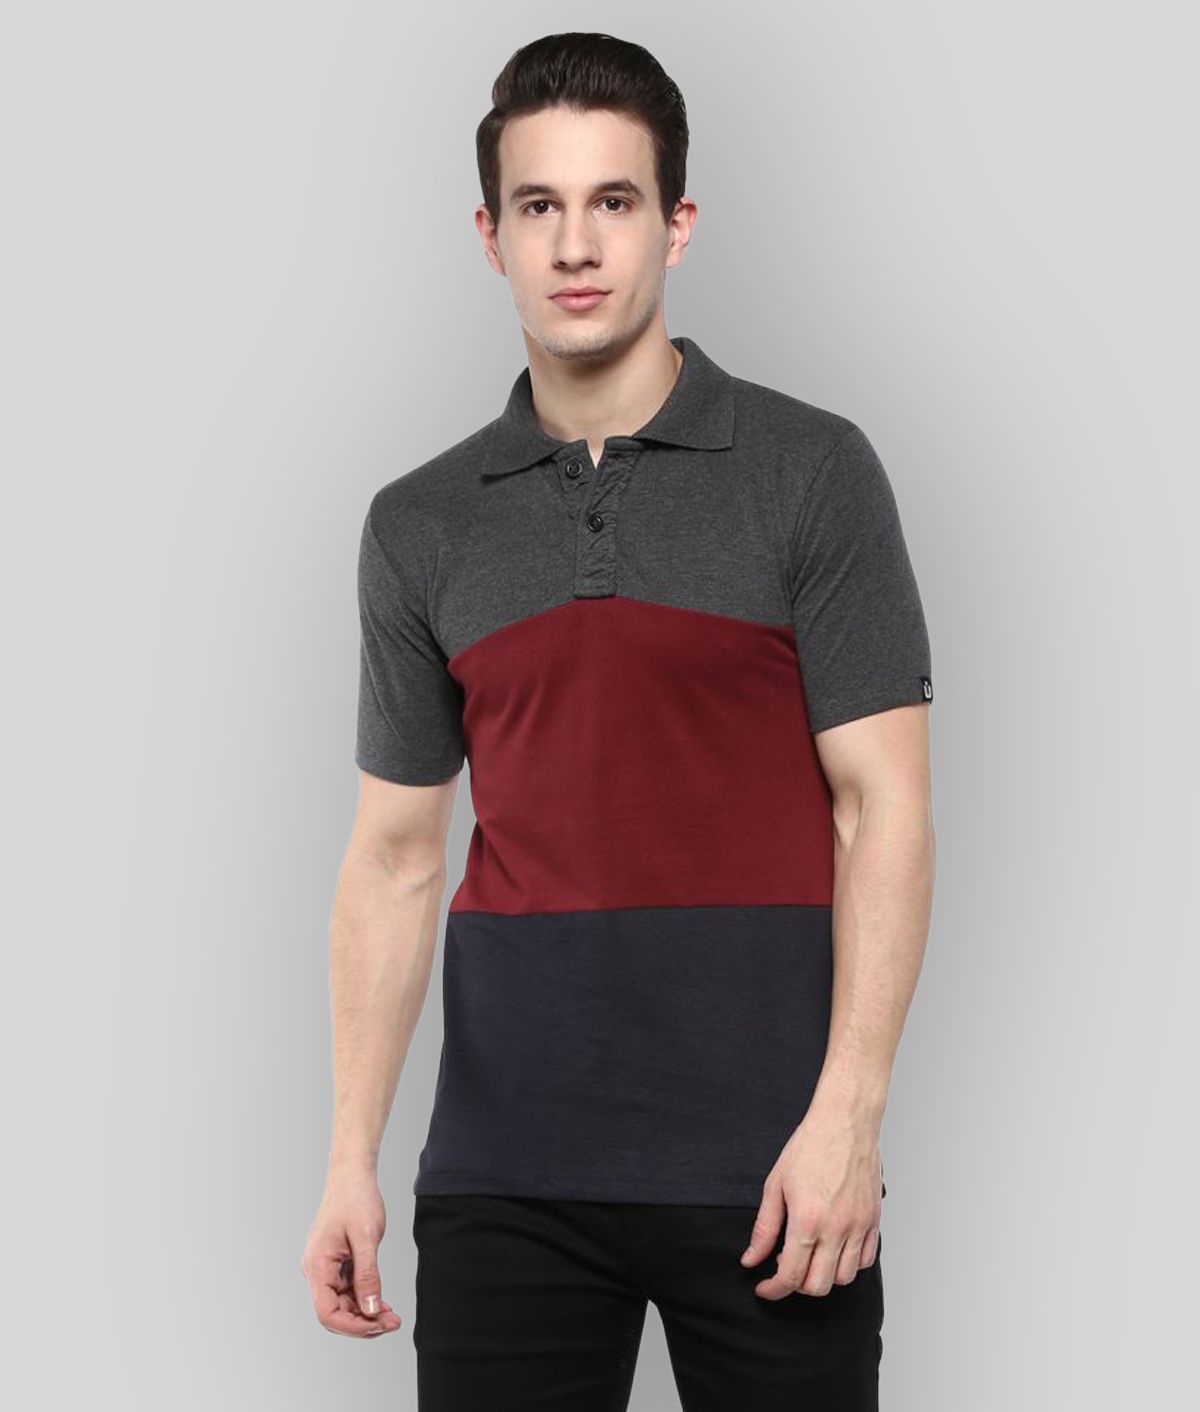 Urbano Fashion - Multicolor Cotton Slim Fit Men's Polo T Shirt ( Pack of 1 )